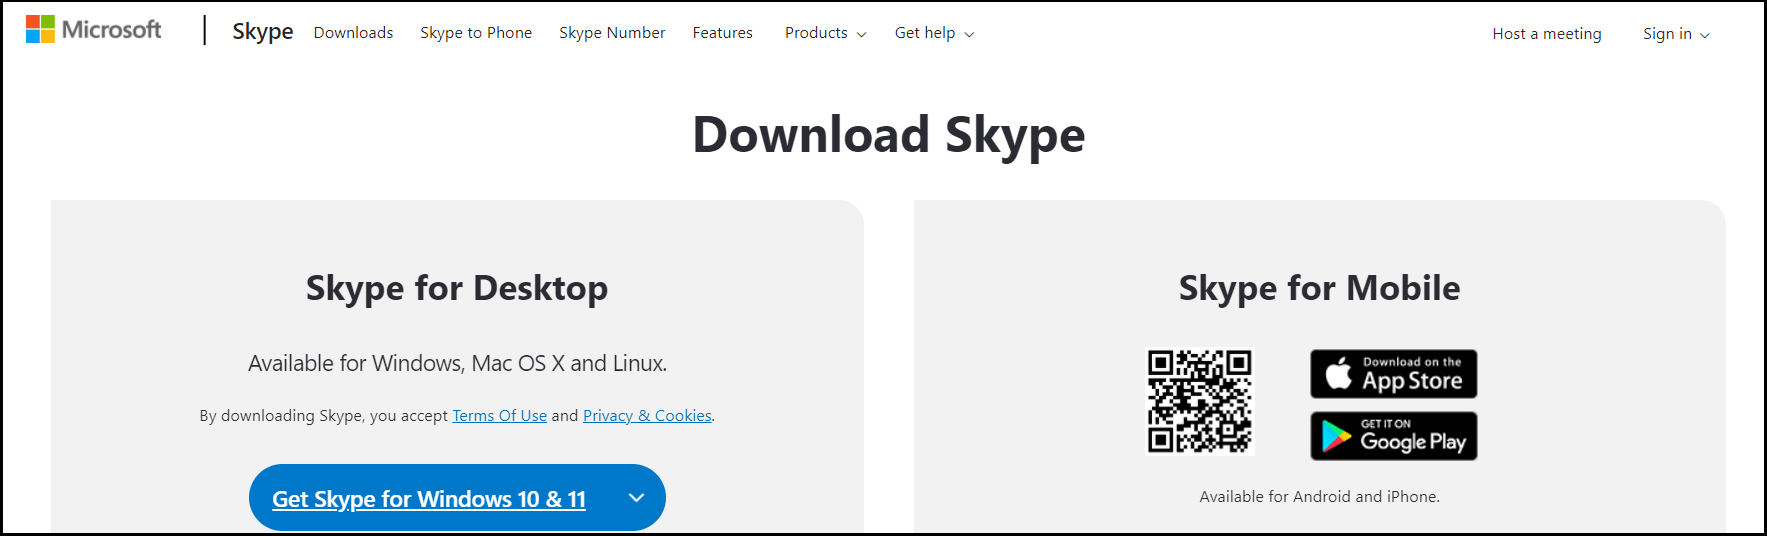 Pagina di Microsoft per scaricare Skype